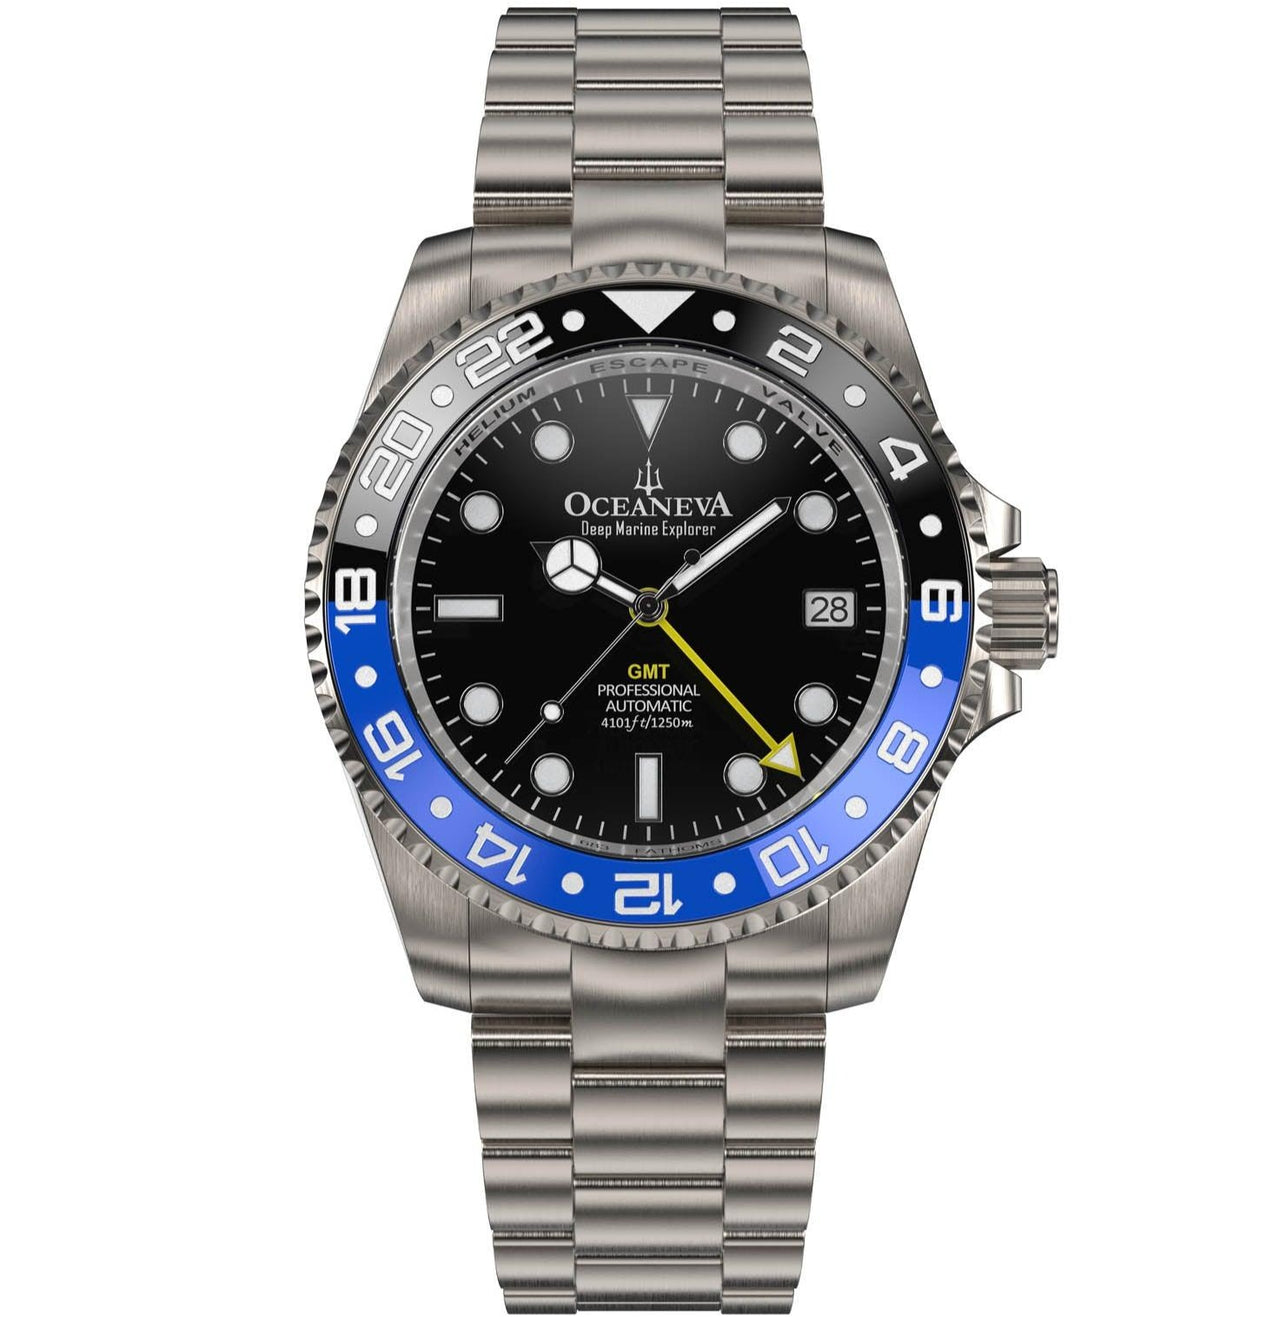 Oceaneva Men's GMT TITANIUM Automatic Deep Marine Explorer 1250M Black Ceramic Bezel Watch - BK.BK.NHCR.BL.GMT.TT automatic GMT watch, titanium automatic watch, Titanium GMT, Titanium watches, Titanum GMT watch